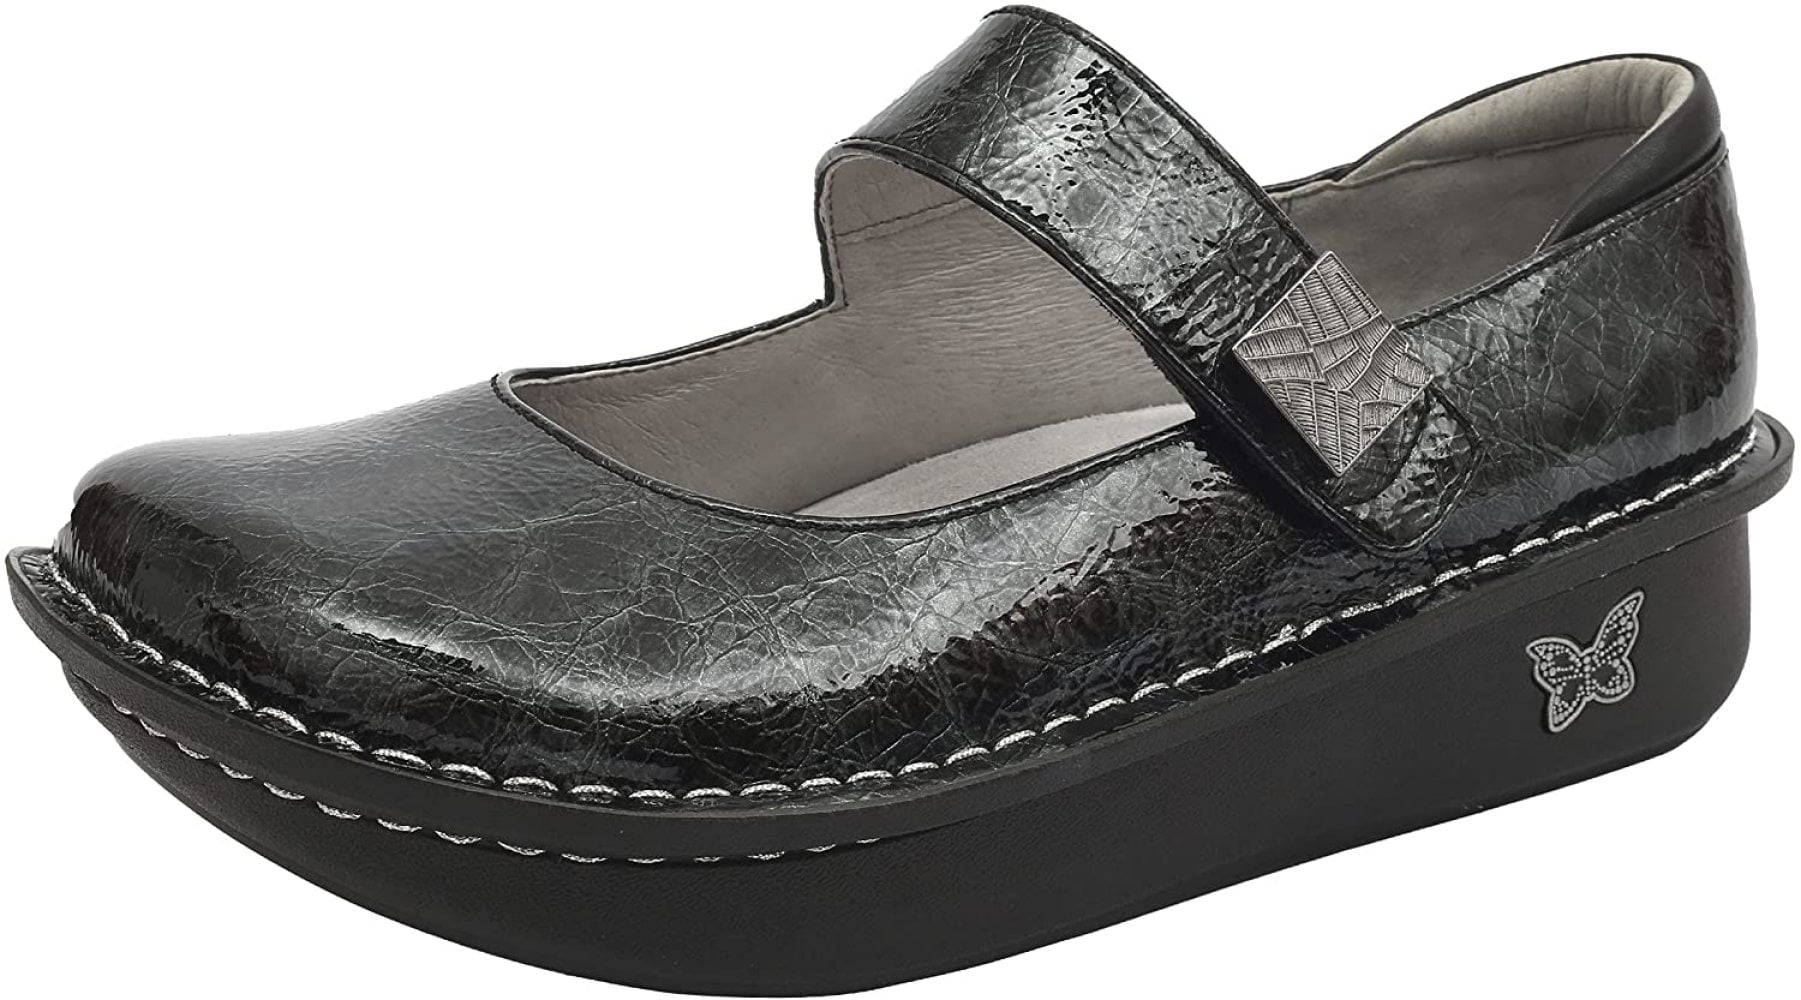 Alegria Alegria Womens Paloma Patent Leather Mary Jane Shoes Size 38 Black Silver 